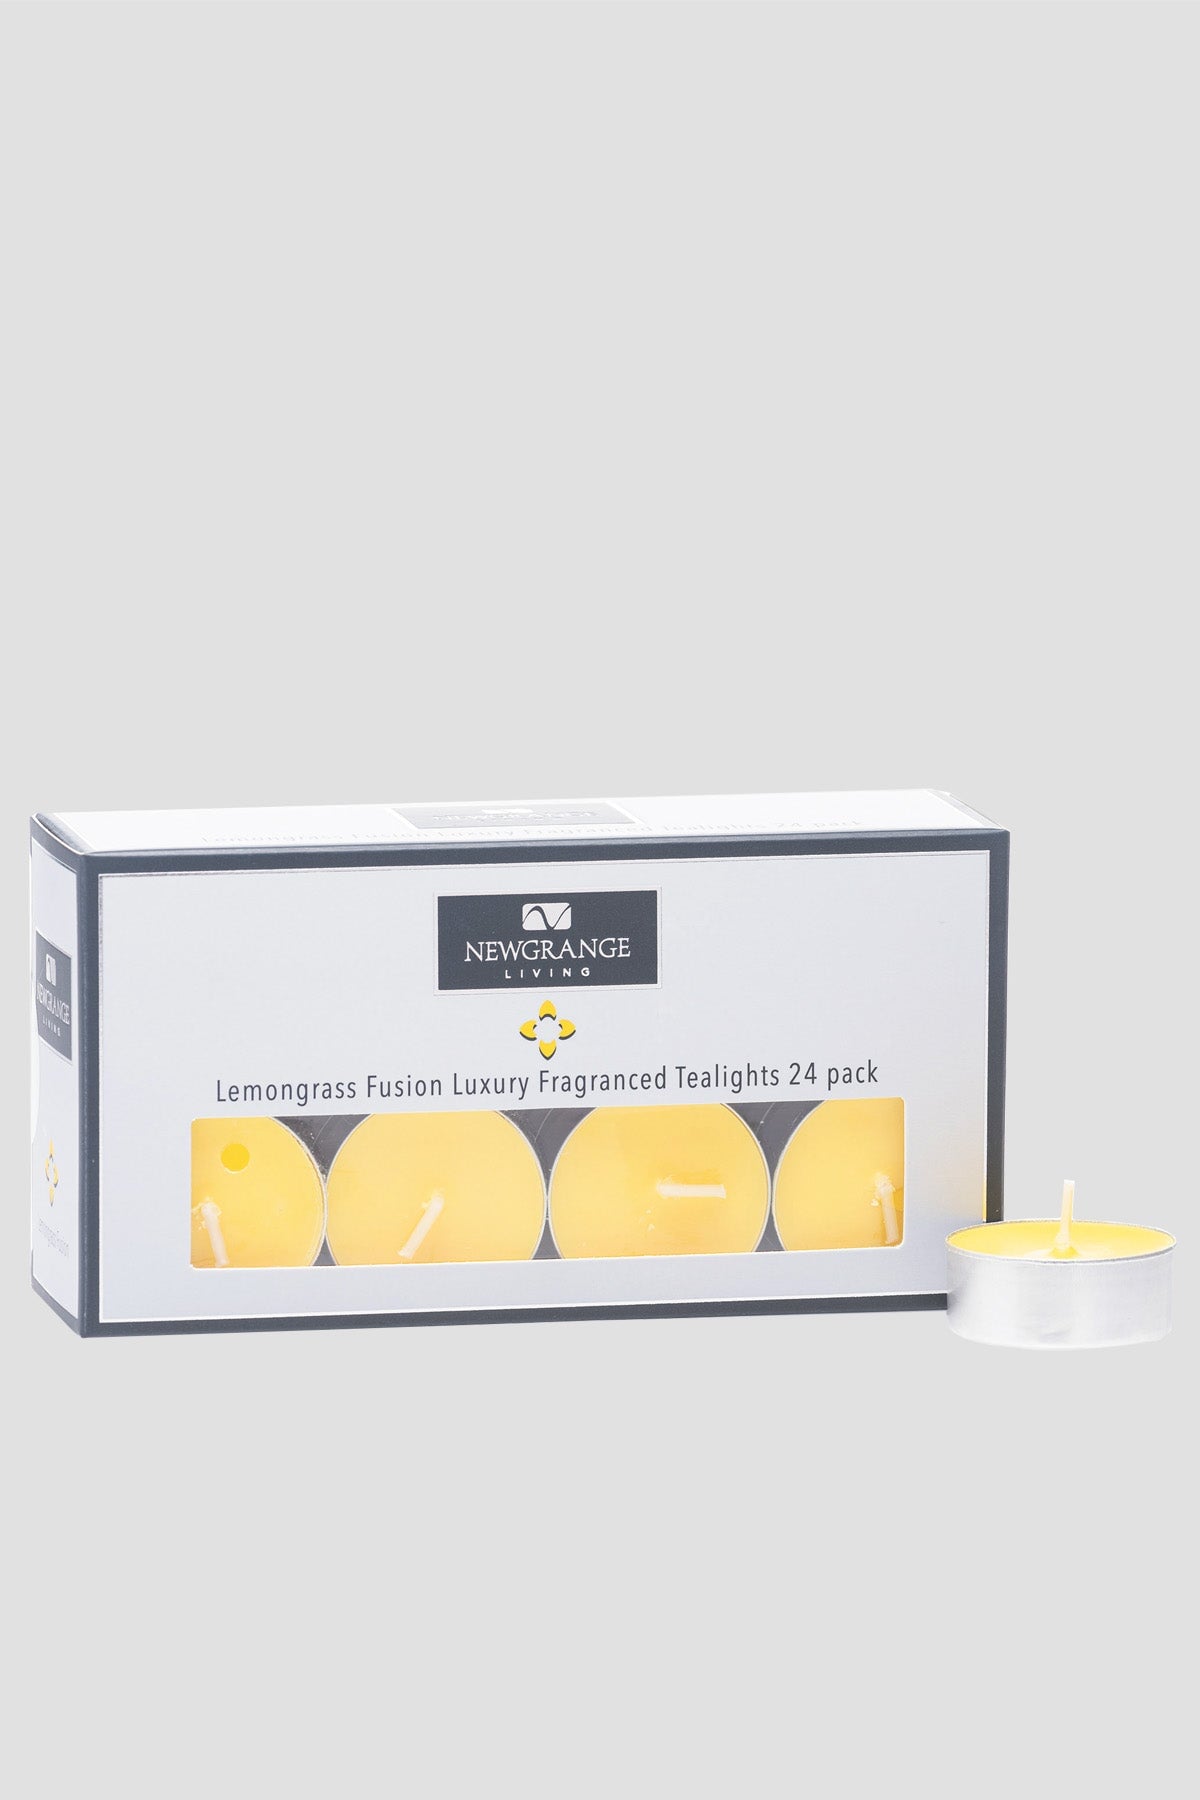 Carraig Donn Lemongrass Luxury Scented T-Lights 24 Pack